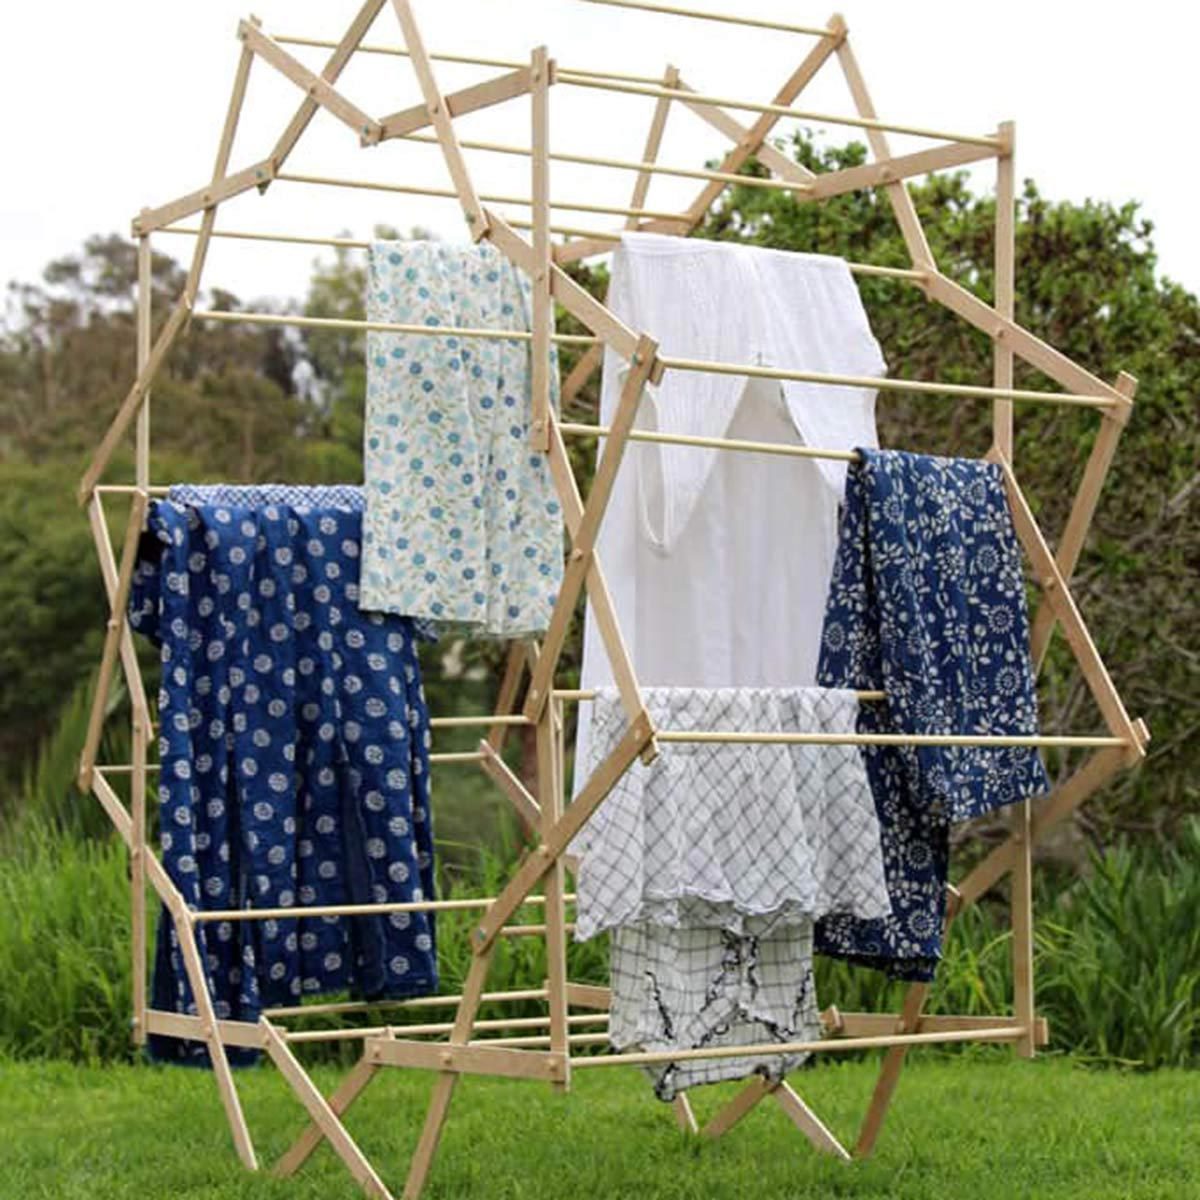 https://www.familyhandyman.com/wp-content/uploads/2018/05/star-shaped-clothes-drying-rackl.jpg